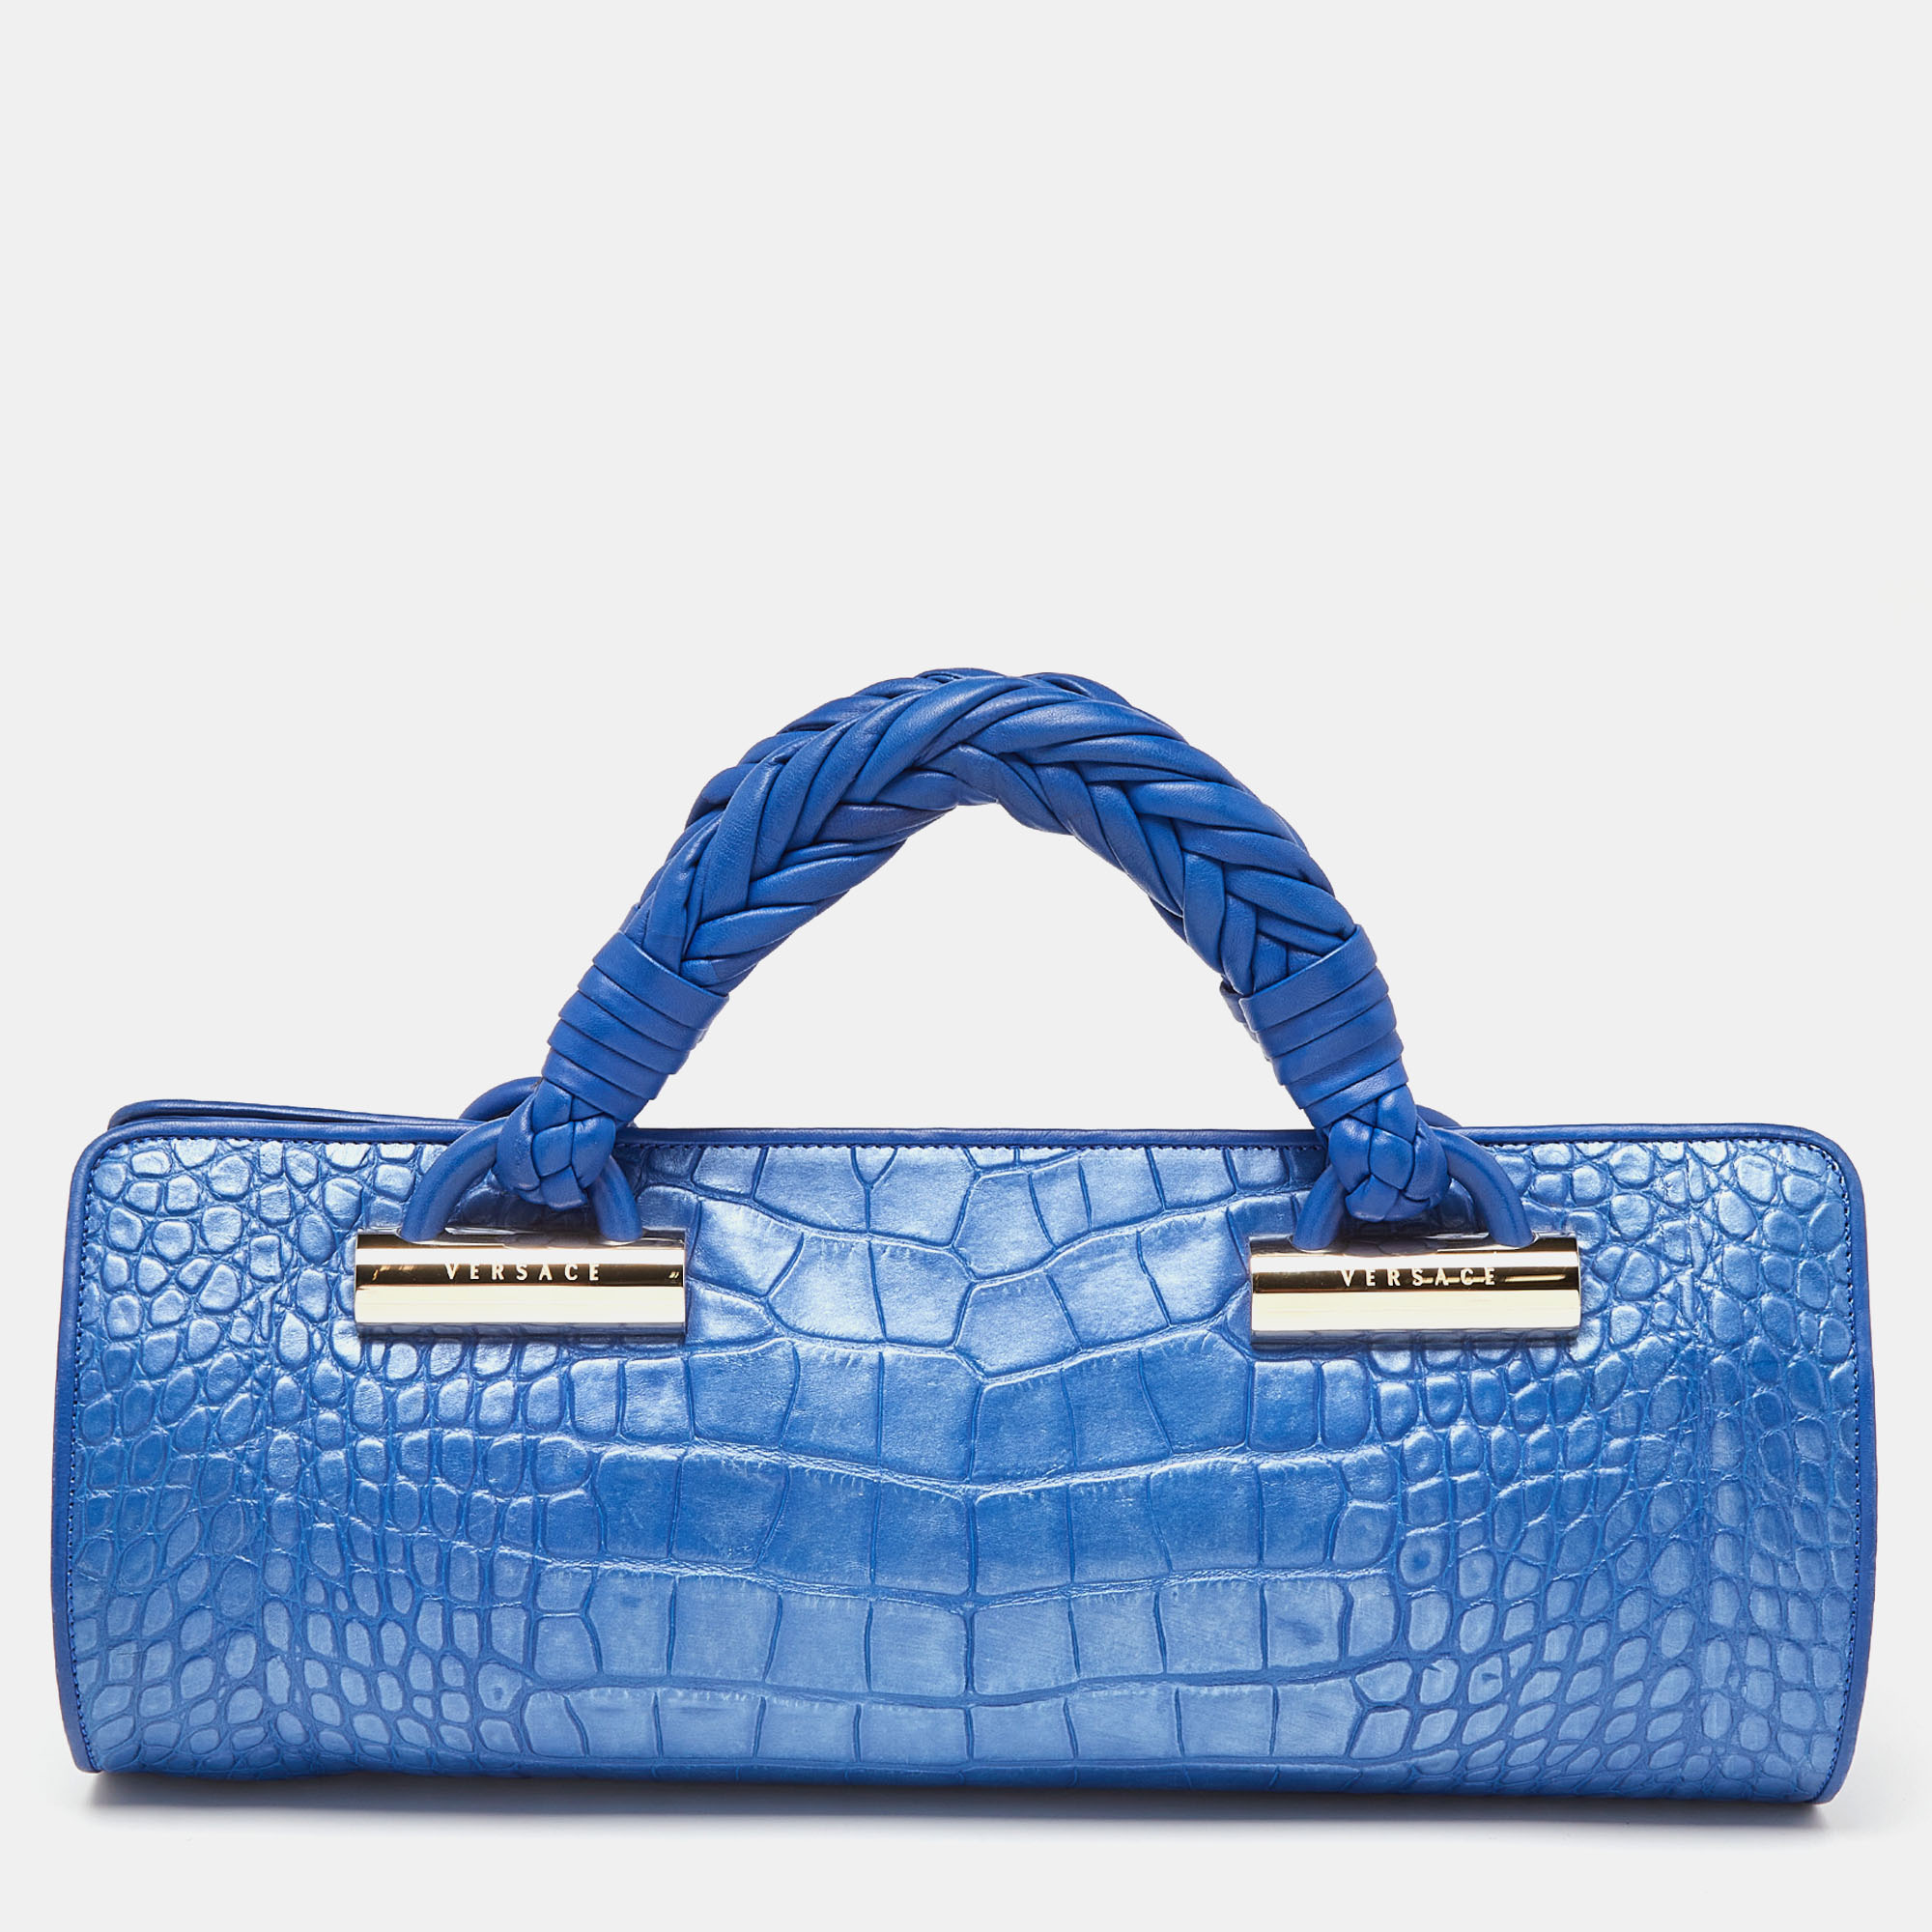 Versace Metallic Blue Croc Embossed Leather Frame Satchel